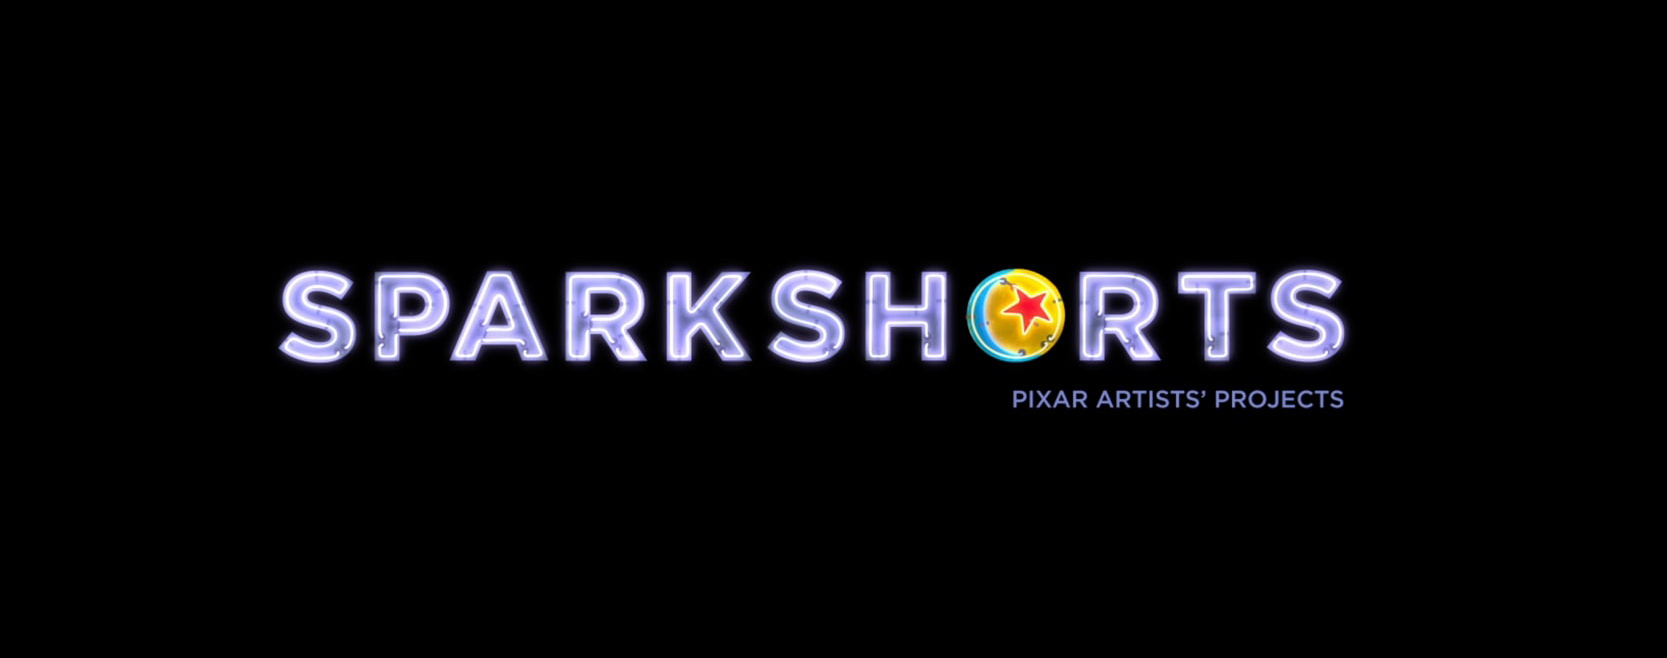 Disney SparkShorts